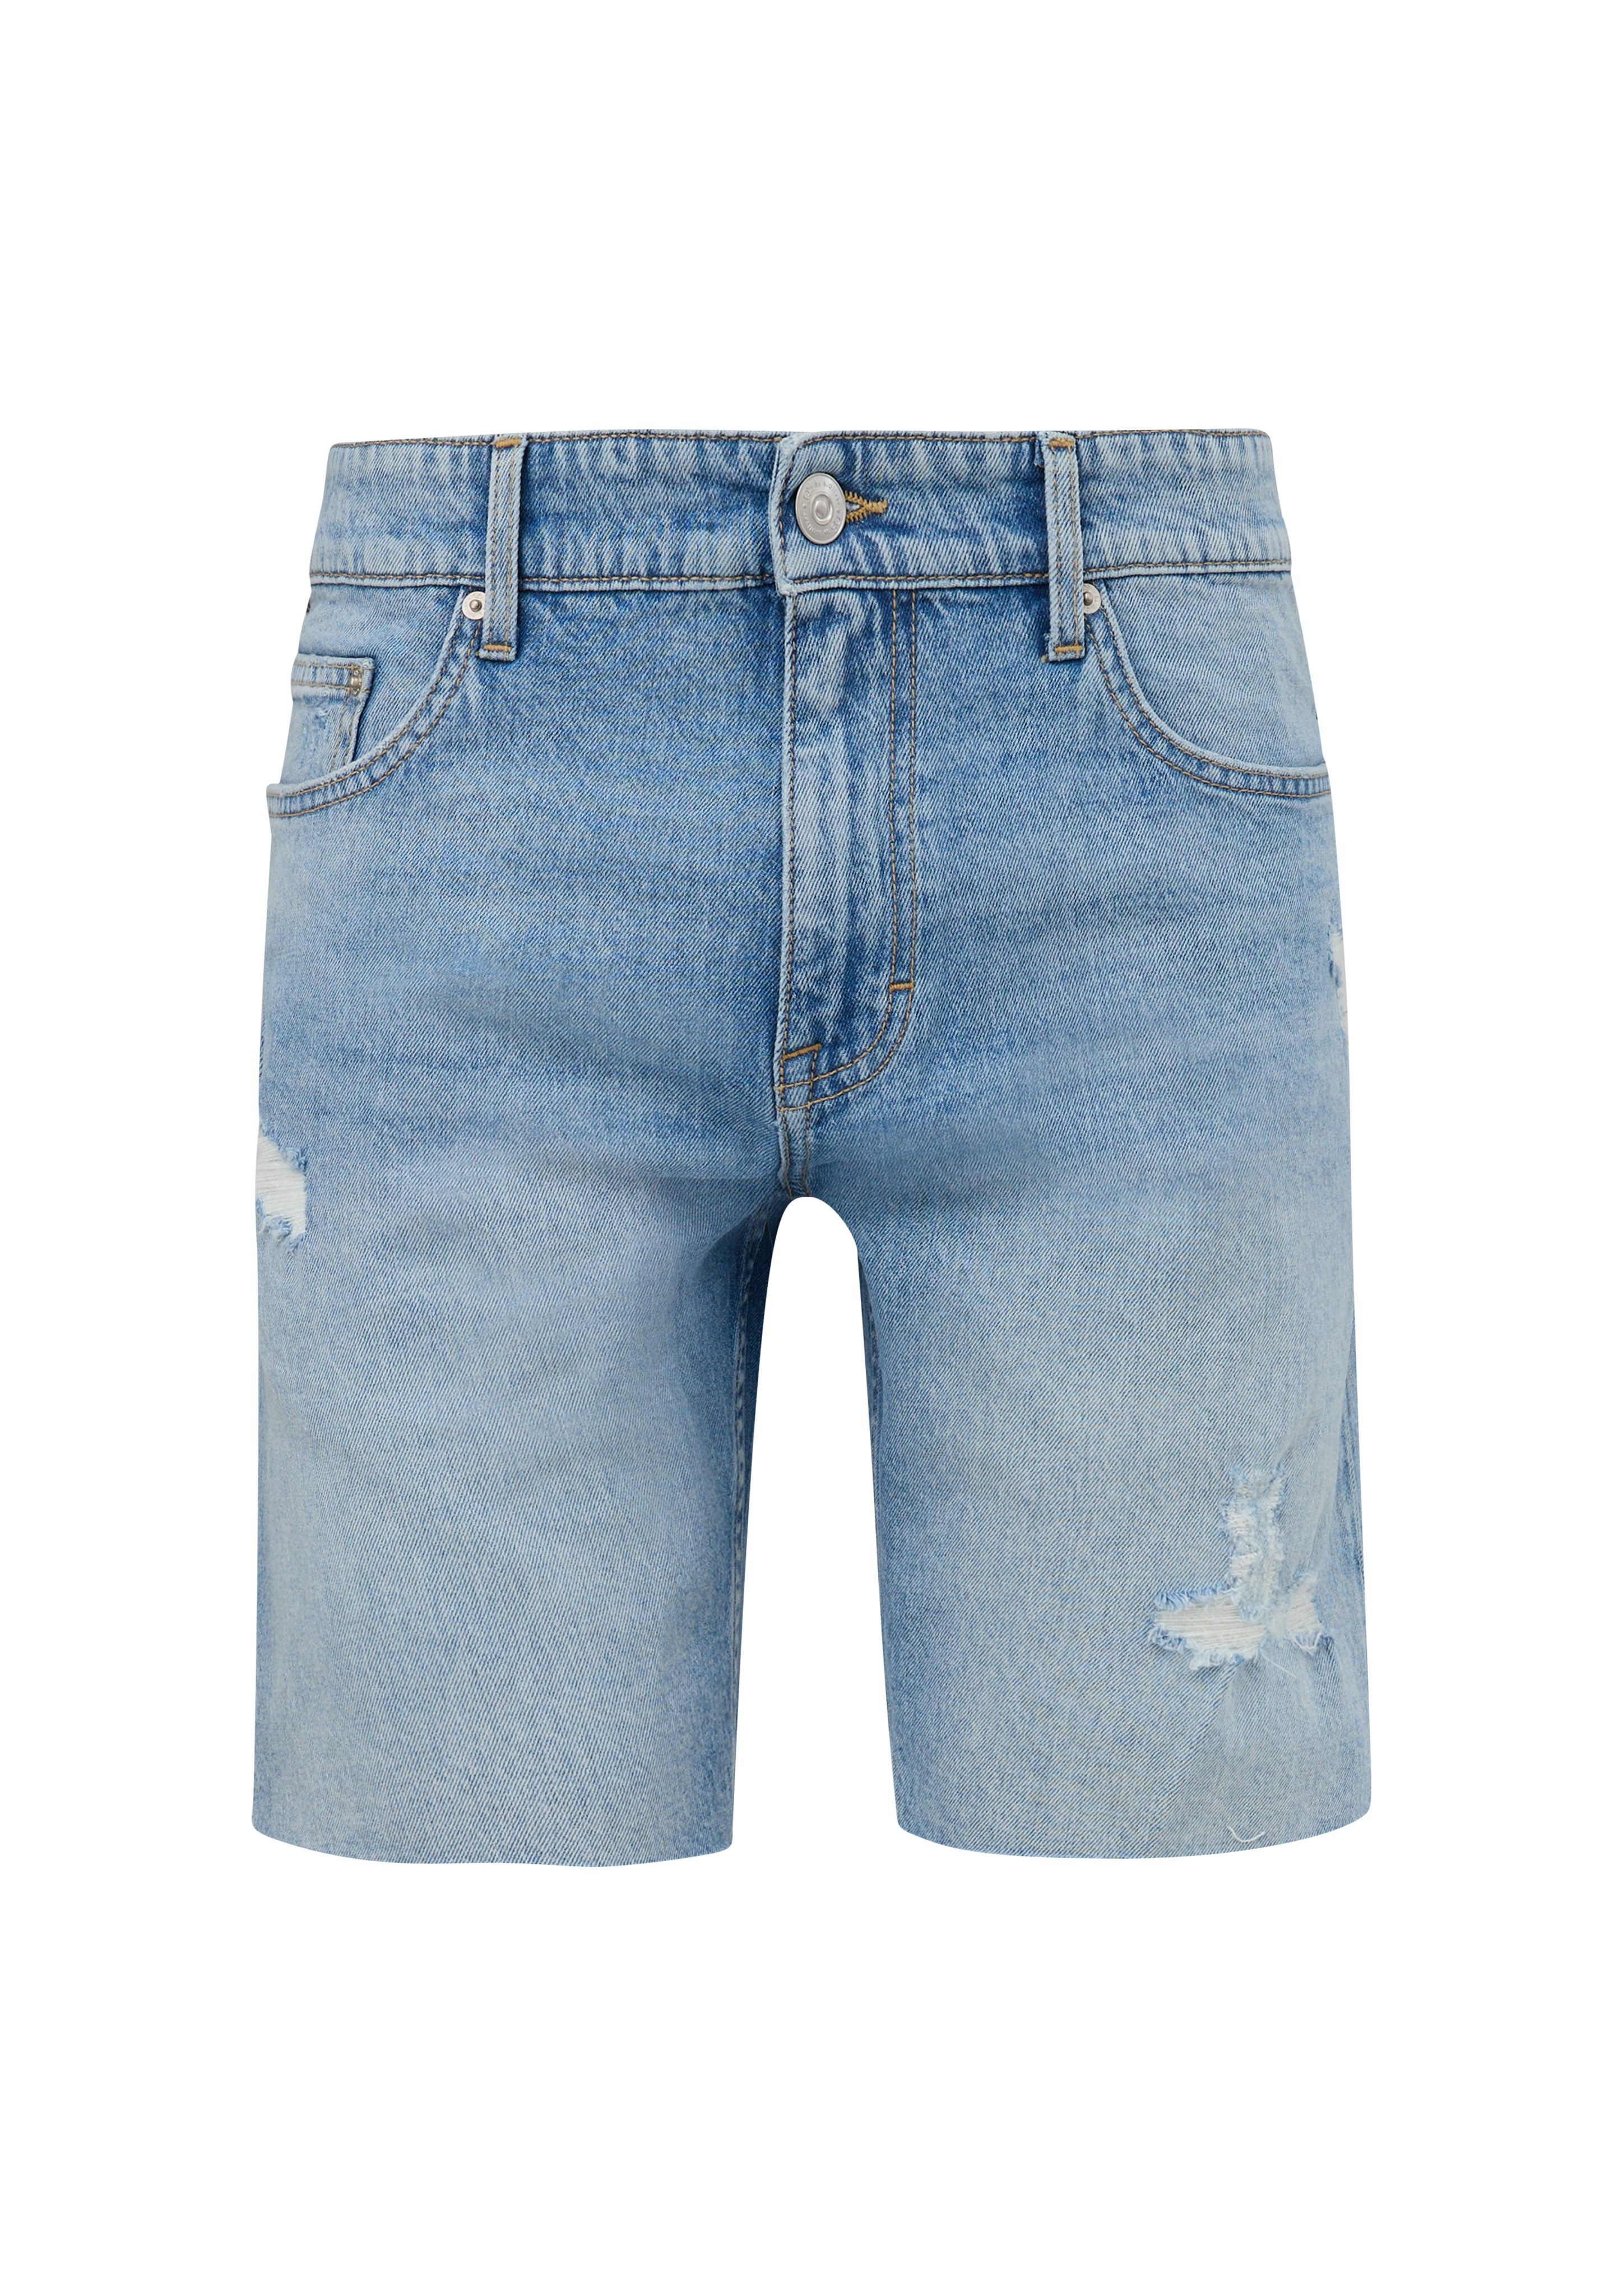 Mid QS / Ziernaht / John / Jeans-Shorts Regular Waschung, Rise Fit himmelblau Straight Leg Jeansshorts Label-Patch,